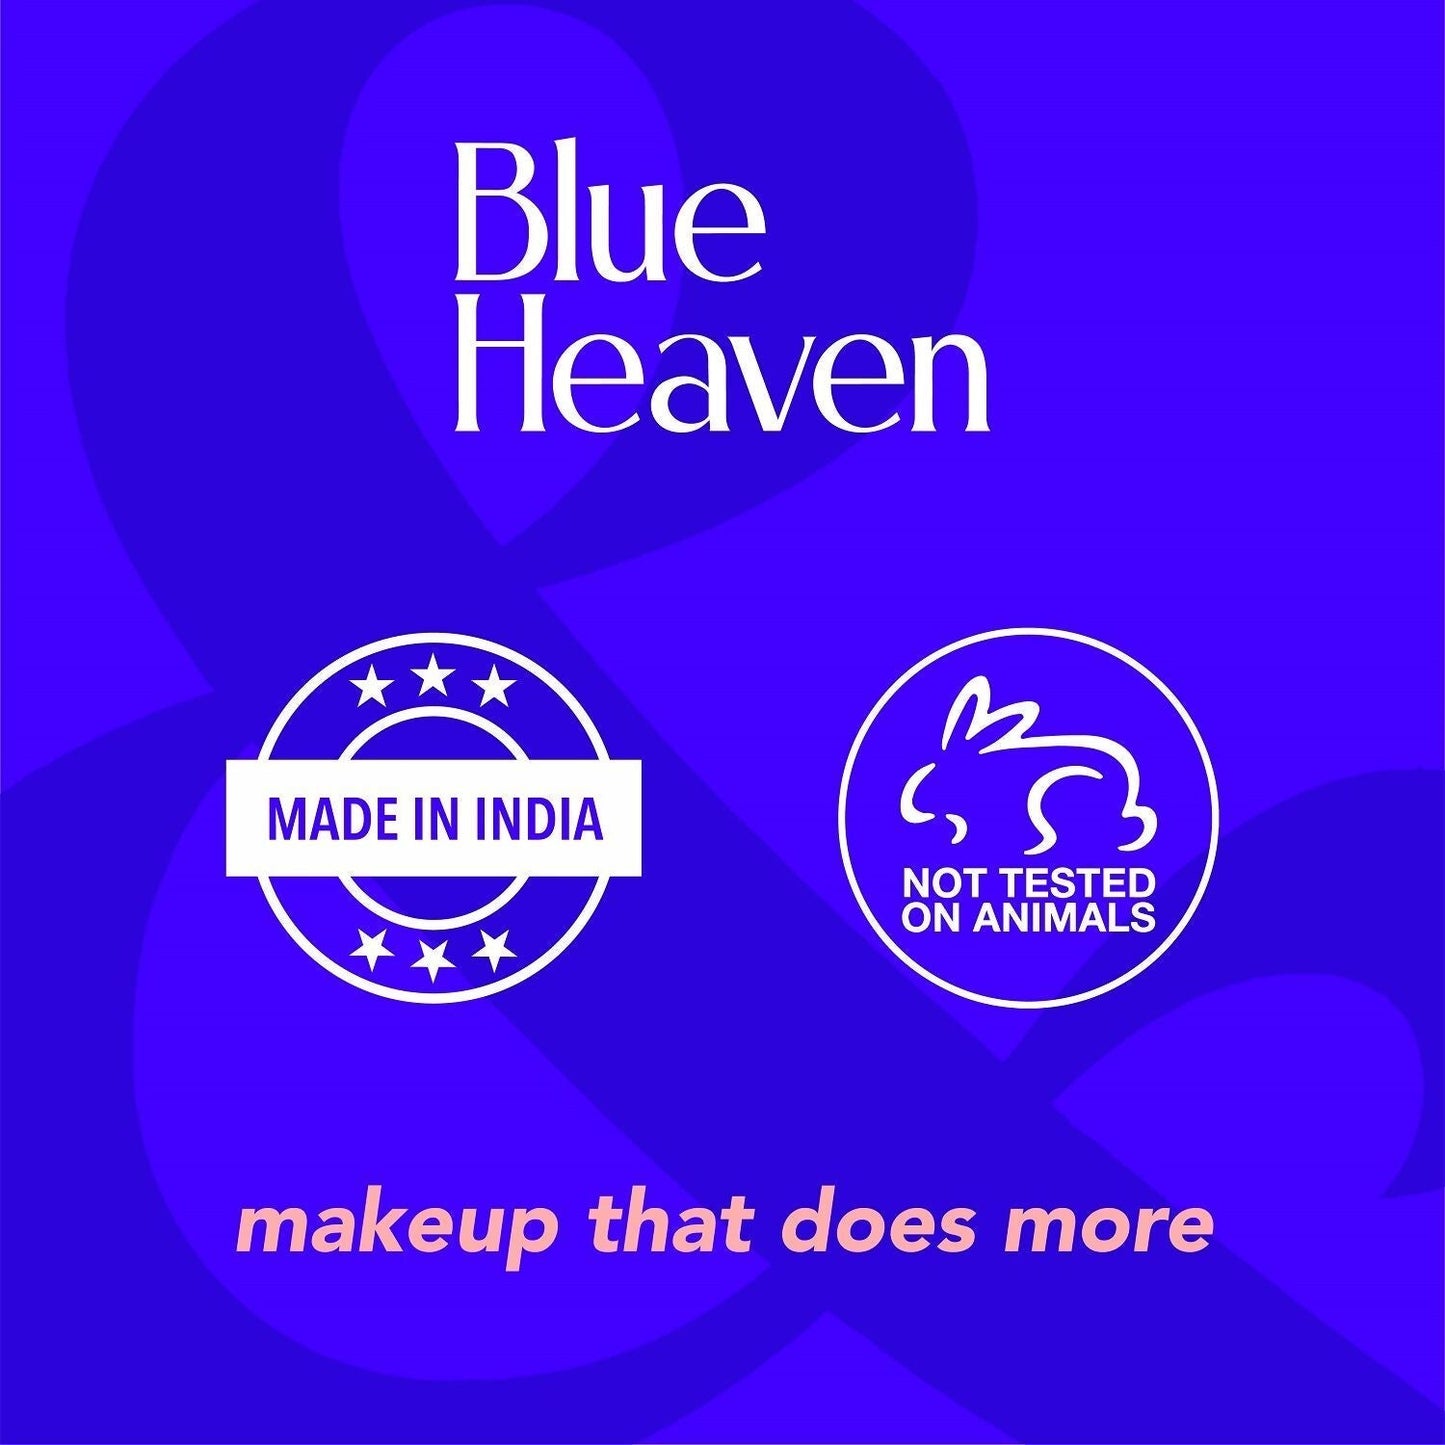 Blue Heaven Pop & Glow Cheek & Eye Bloom Blush - Glam Pink